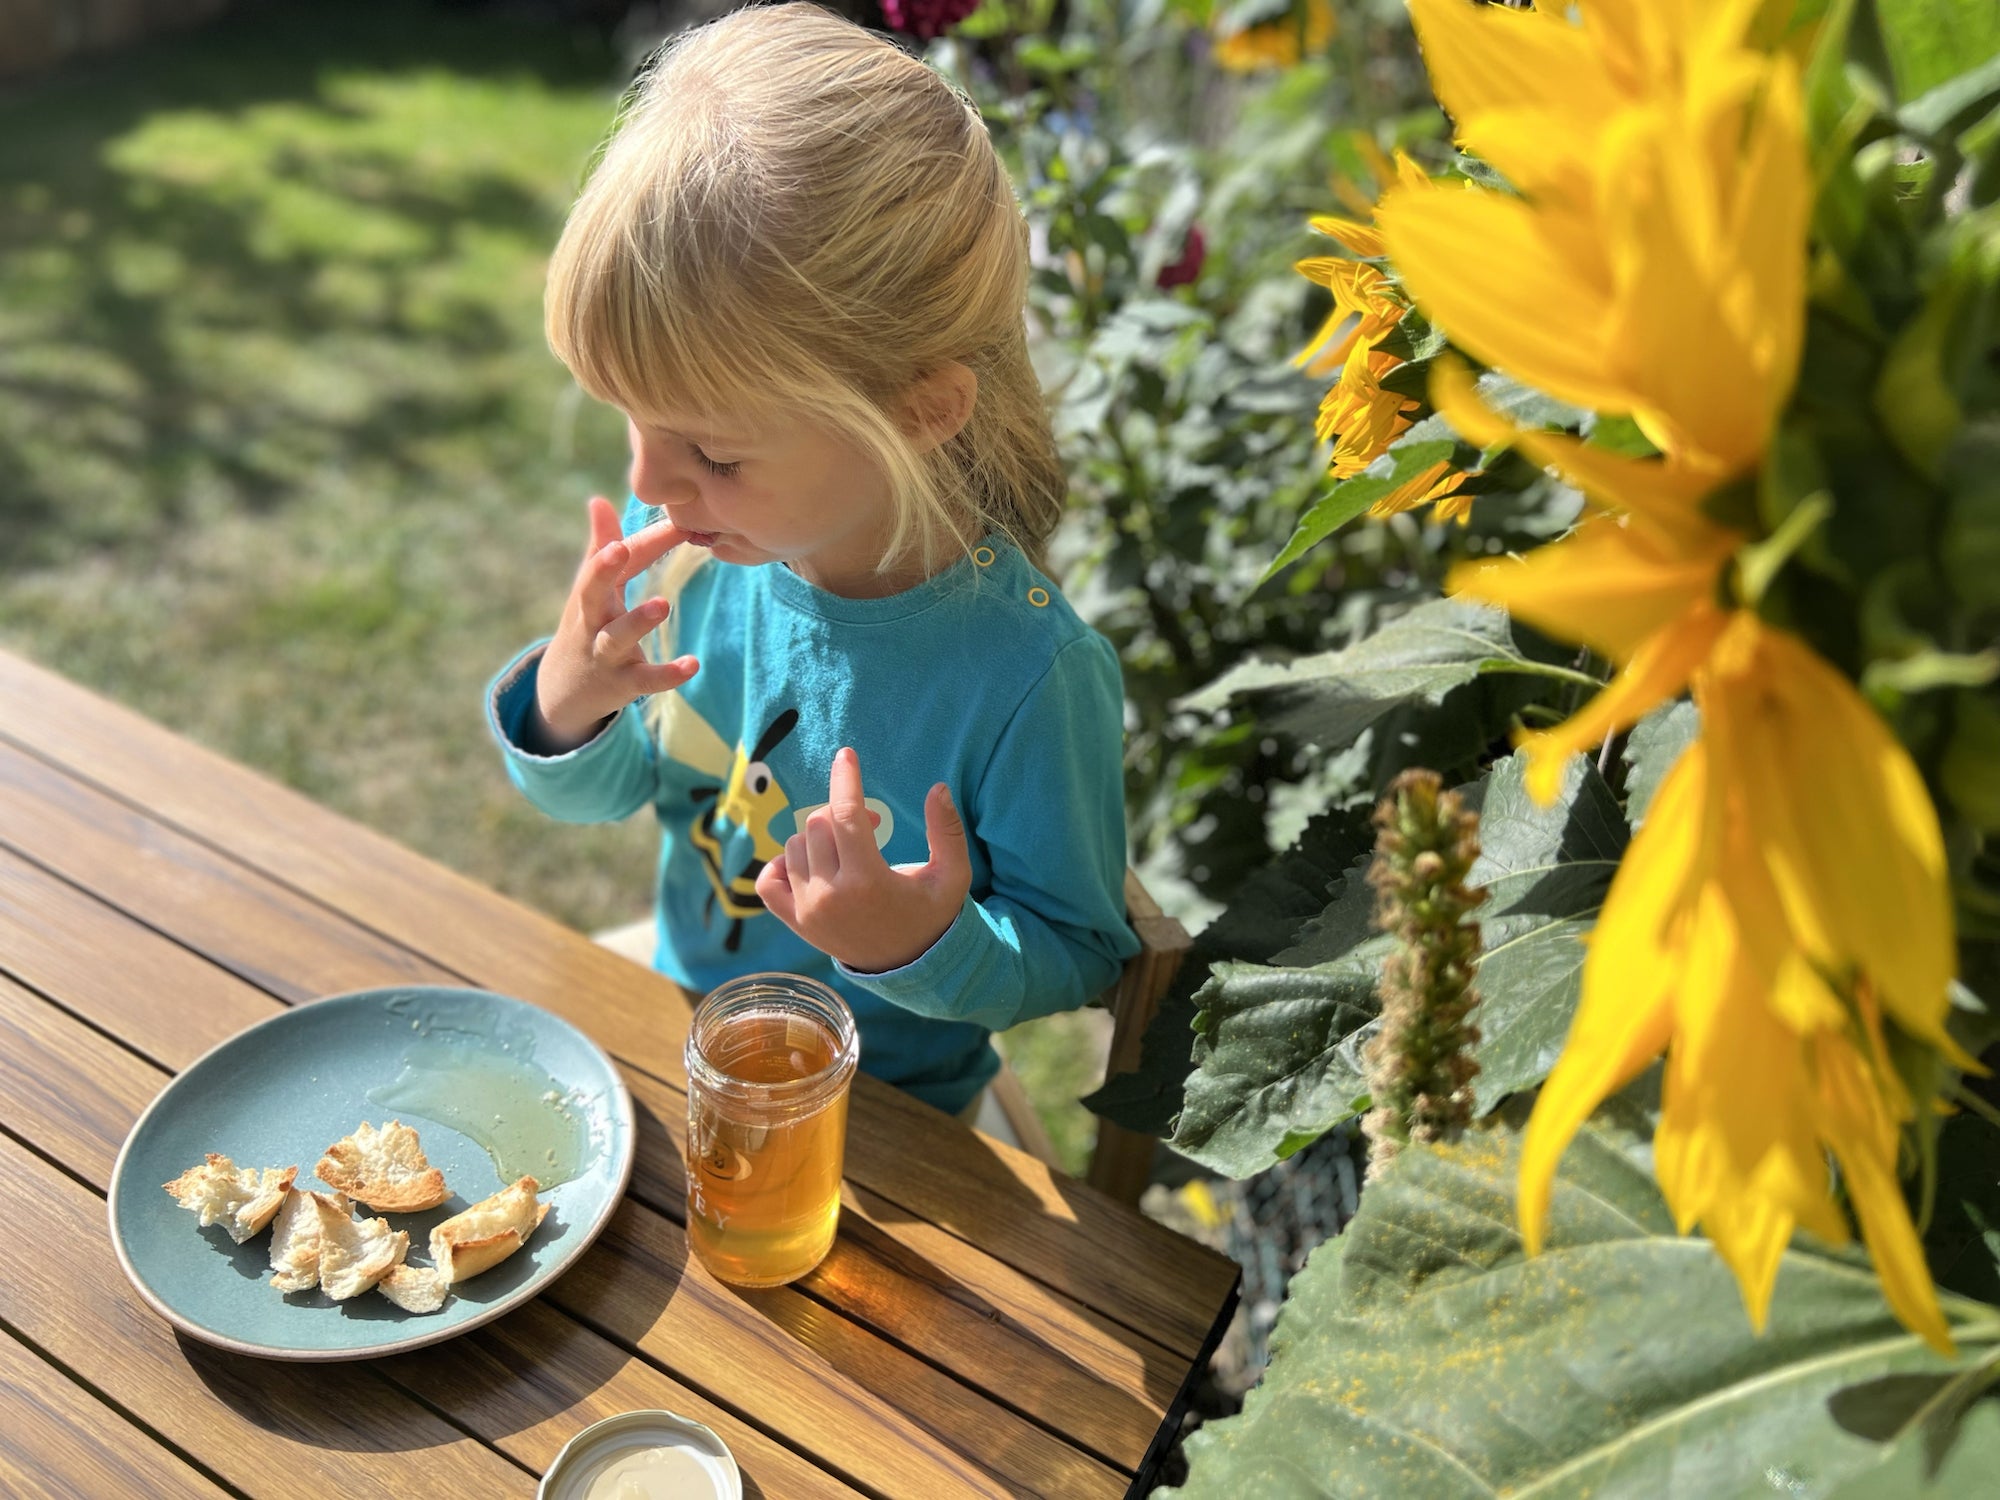 Eva Gilboy enjoying her dad's honey in the garden next to the sunflowers